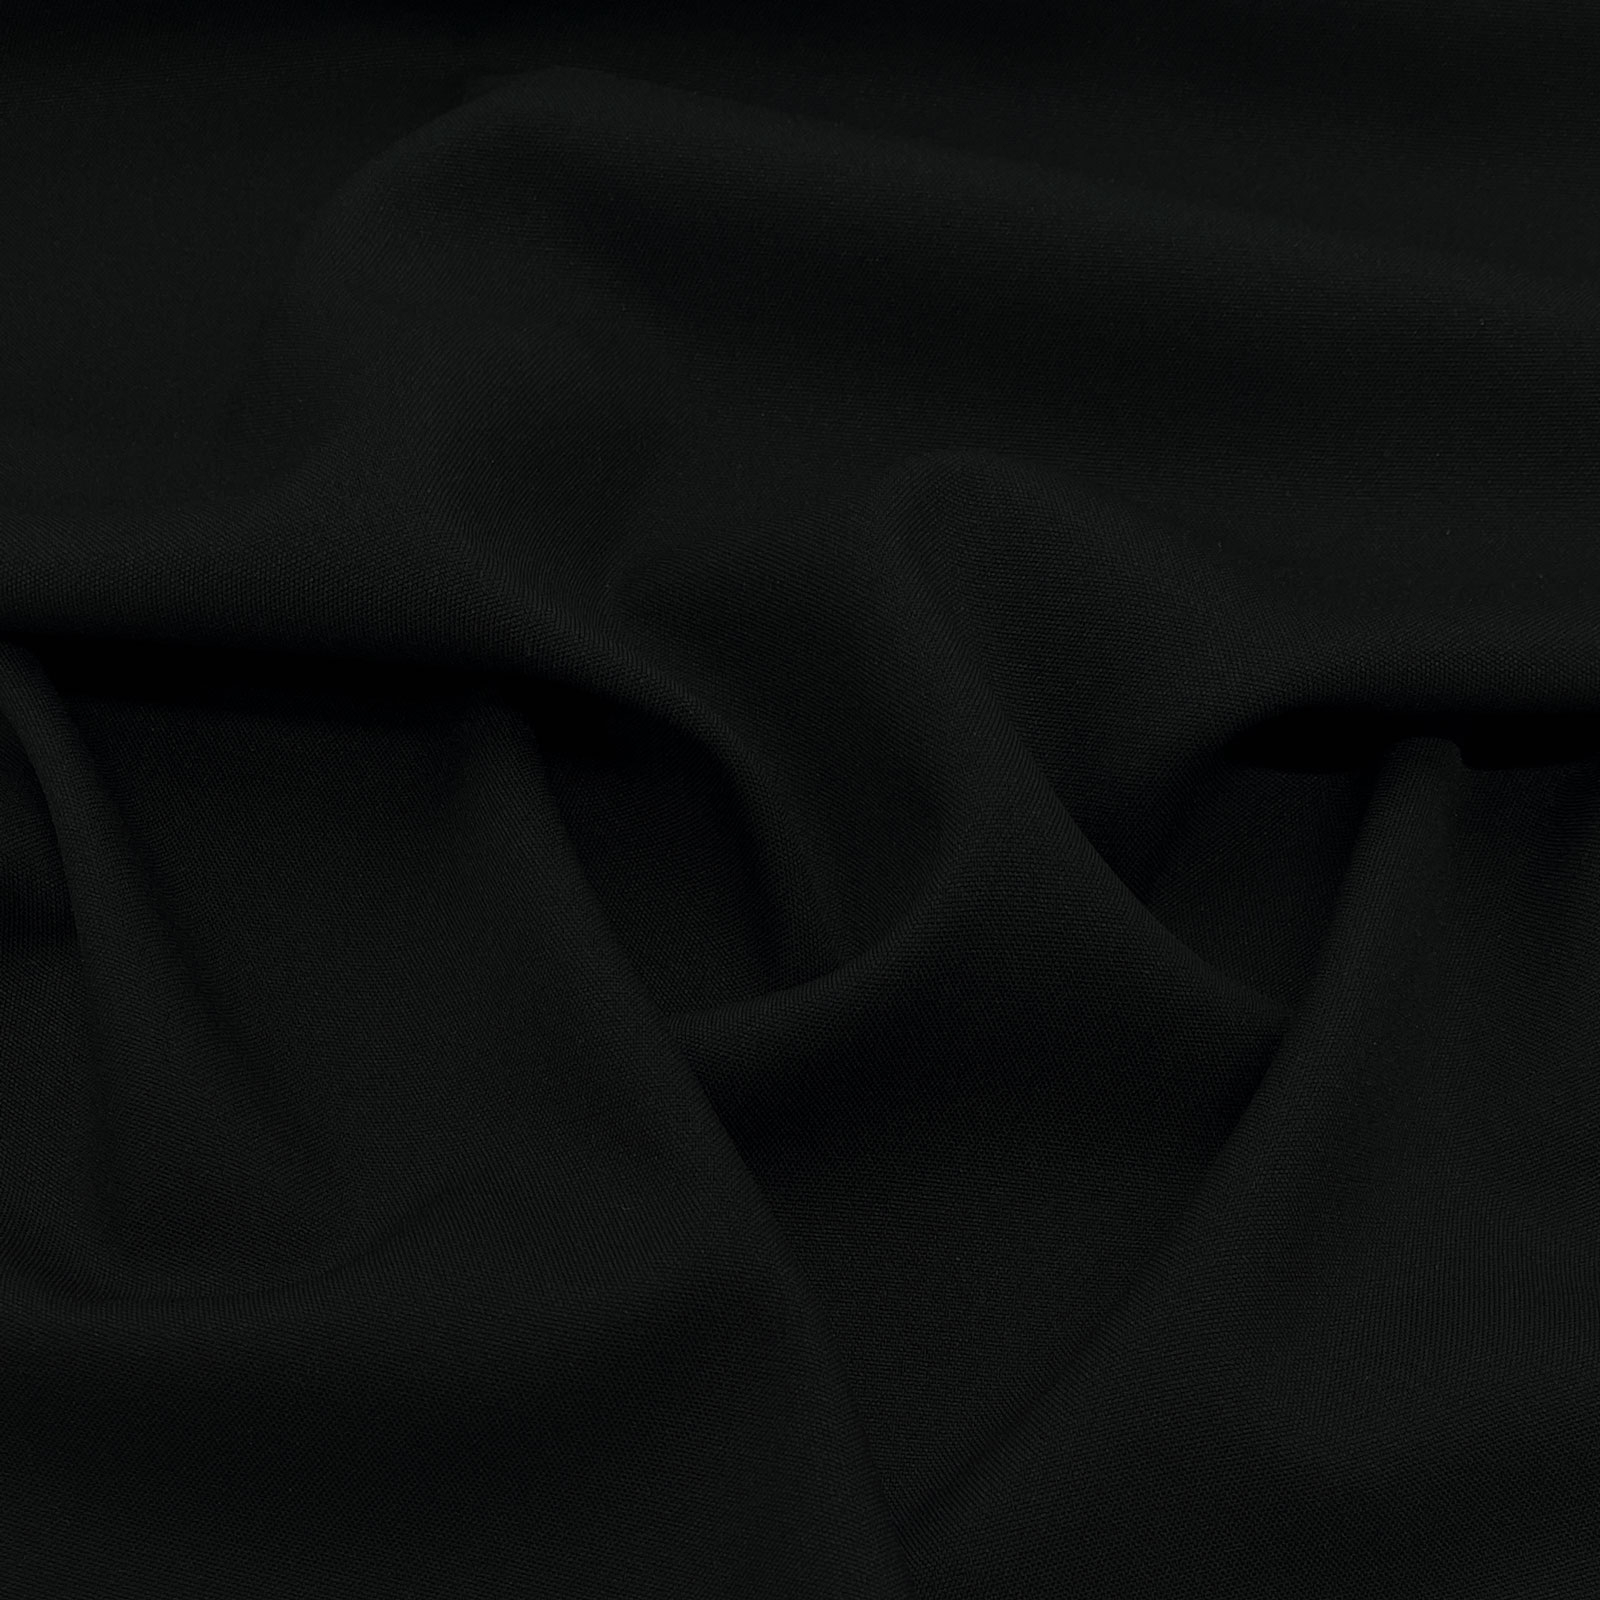 Trekking Functional fabric - slightly elastic & breathable - Black